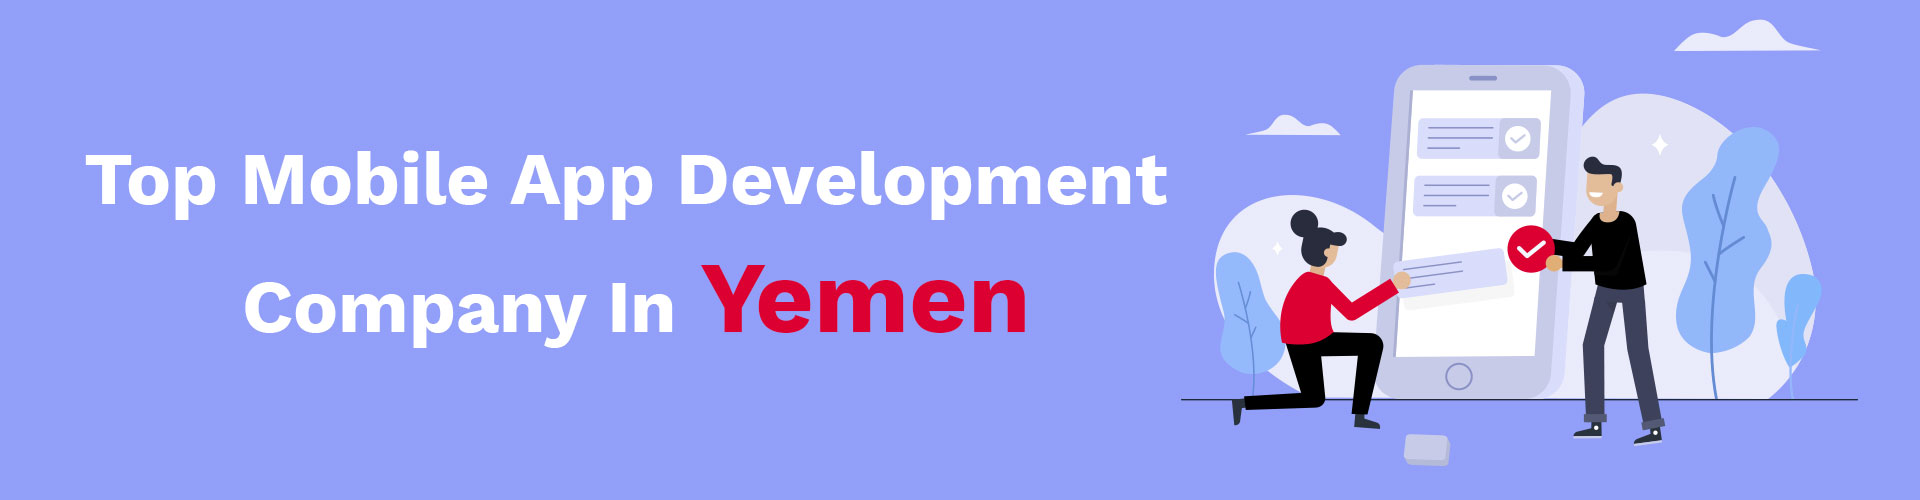 mobile app development company yemen